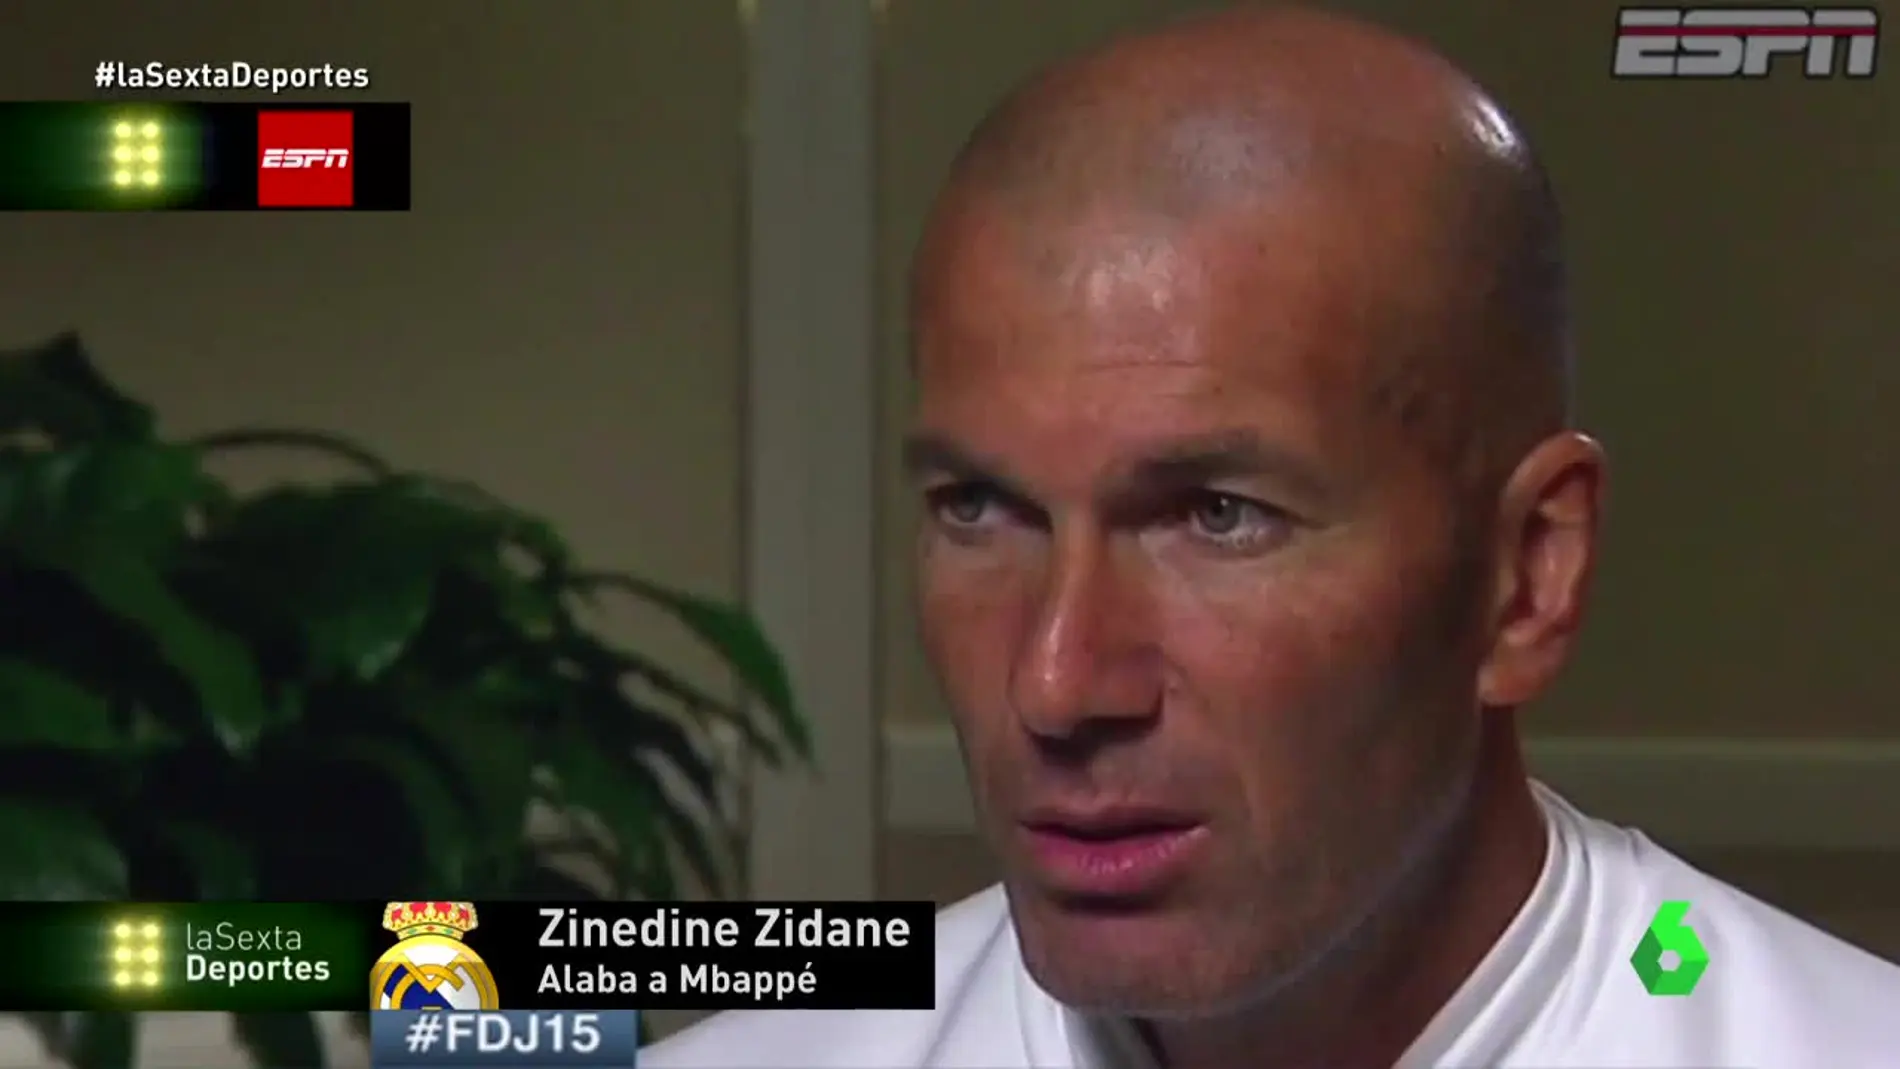 El técnico del Real Madrid, Zinedine Zidane